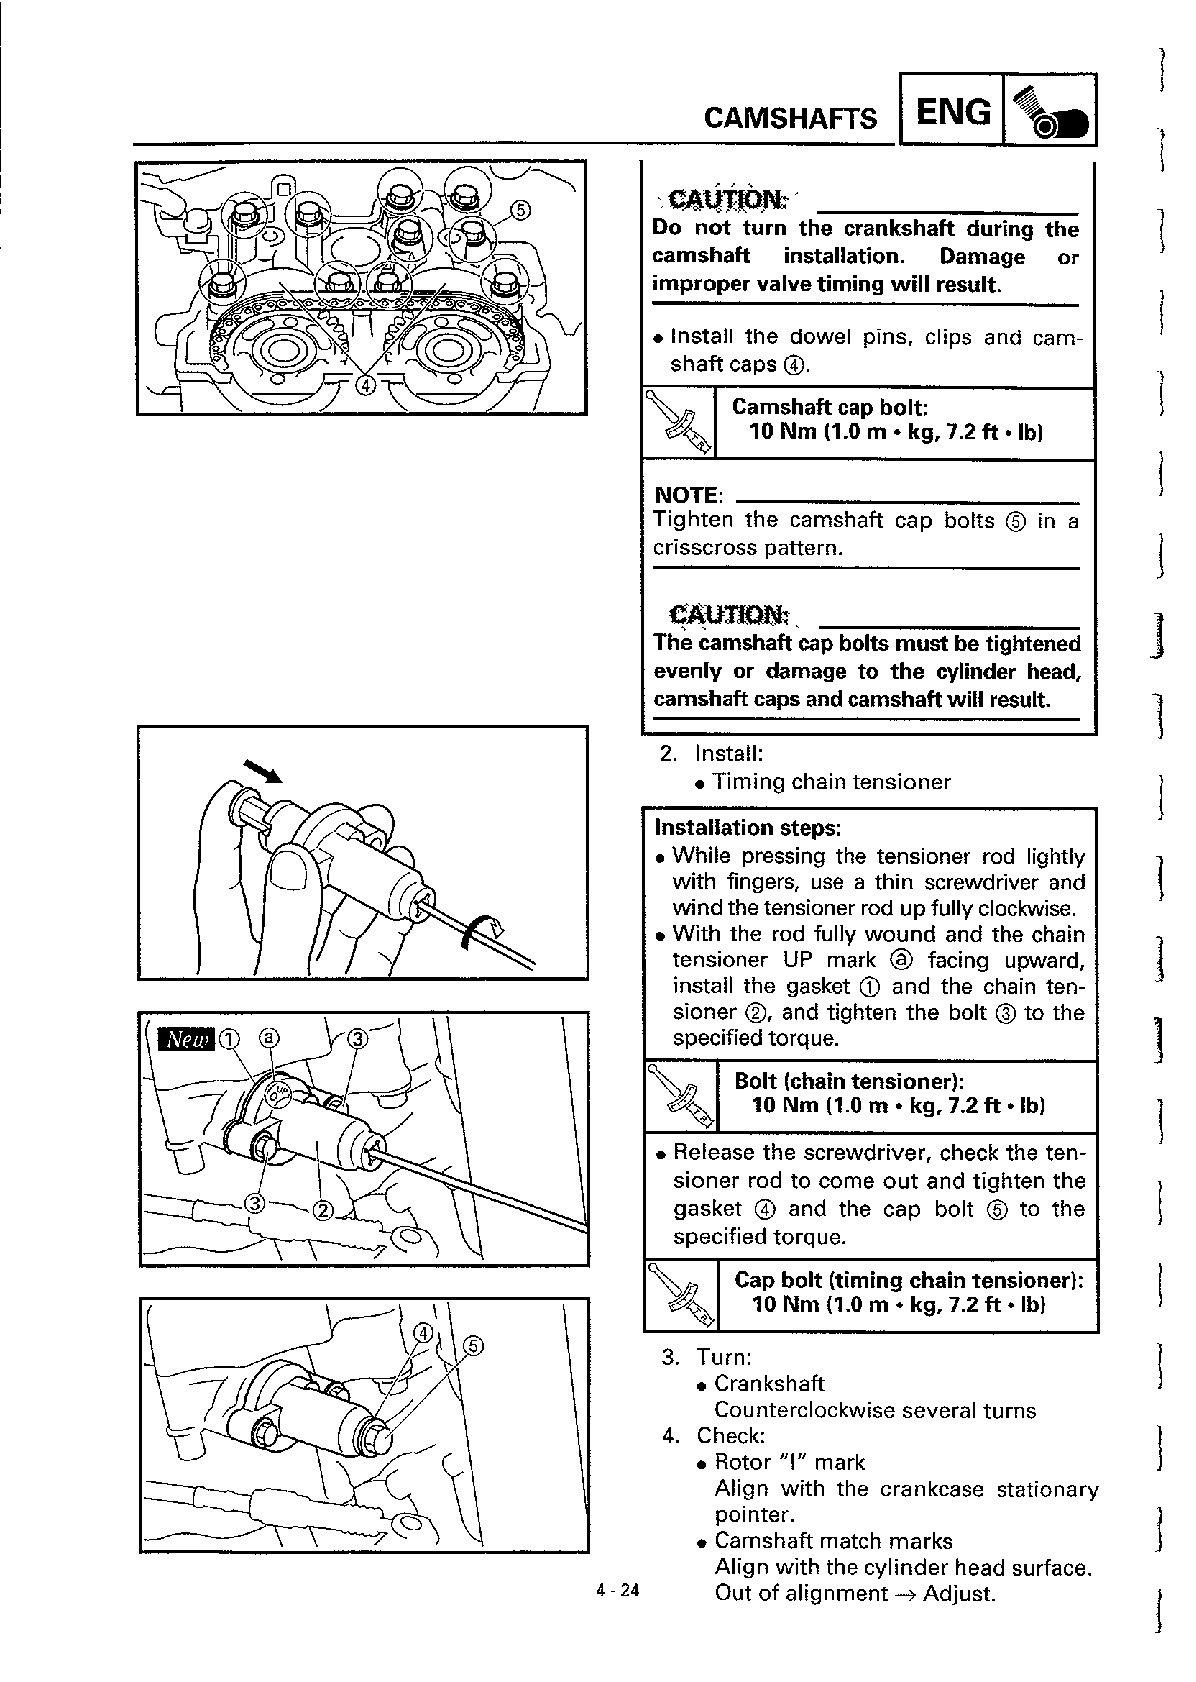 Manual de servicio de motocross Yamaha YZ400F 1998-2000